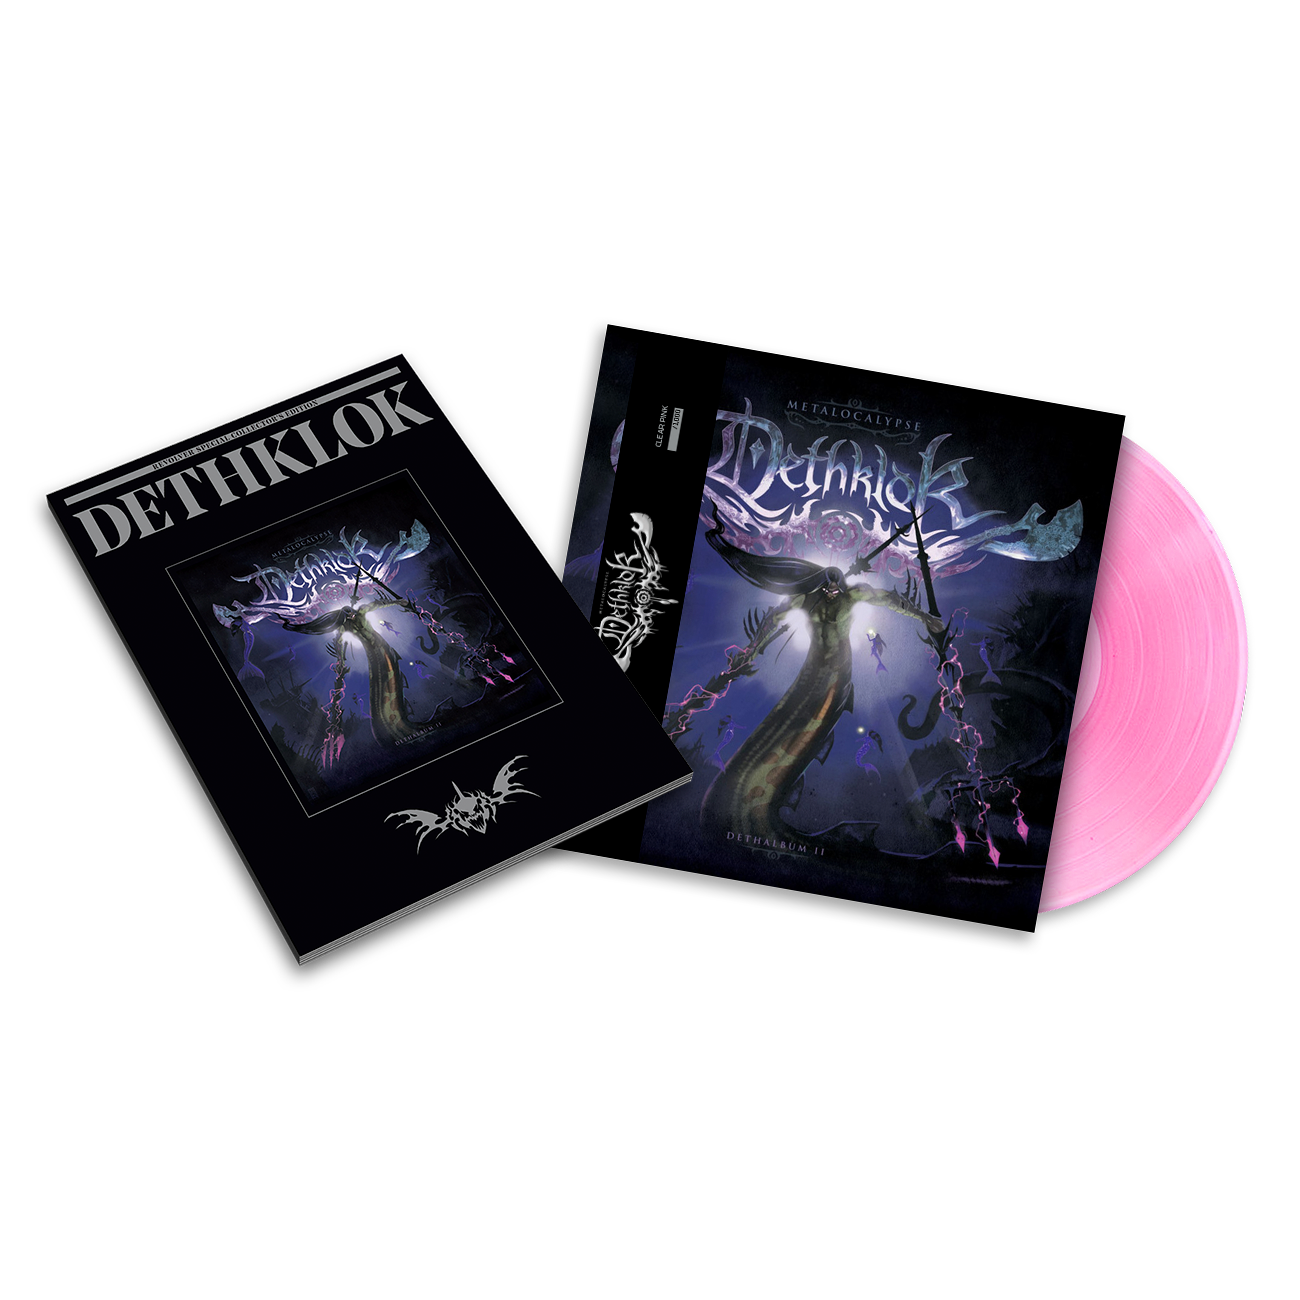 DETHKLOK 'DETHALBUM II' CLEAR LP DETHKLOK x REVOLVER SPECIAL CO - Alternative Press